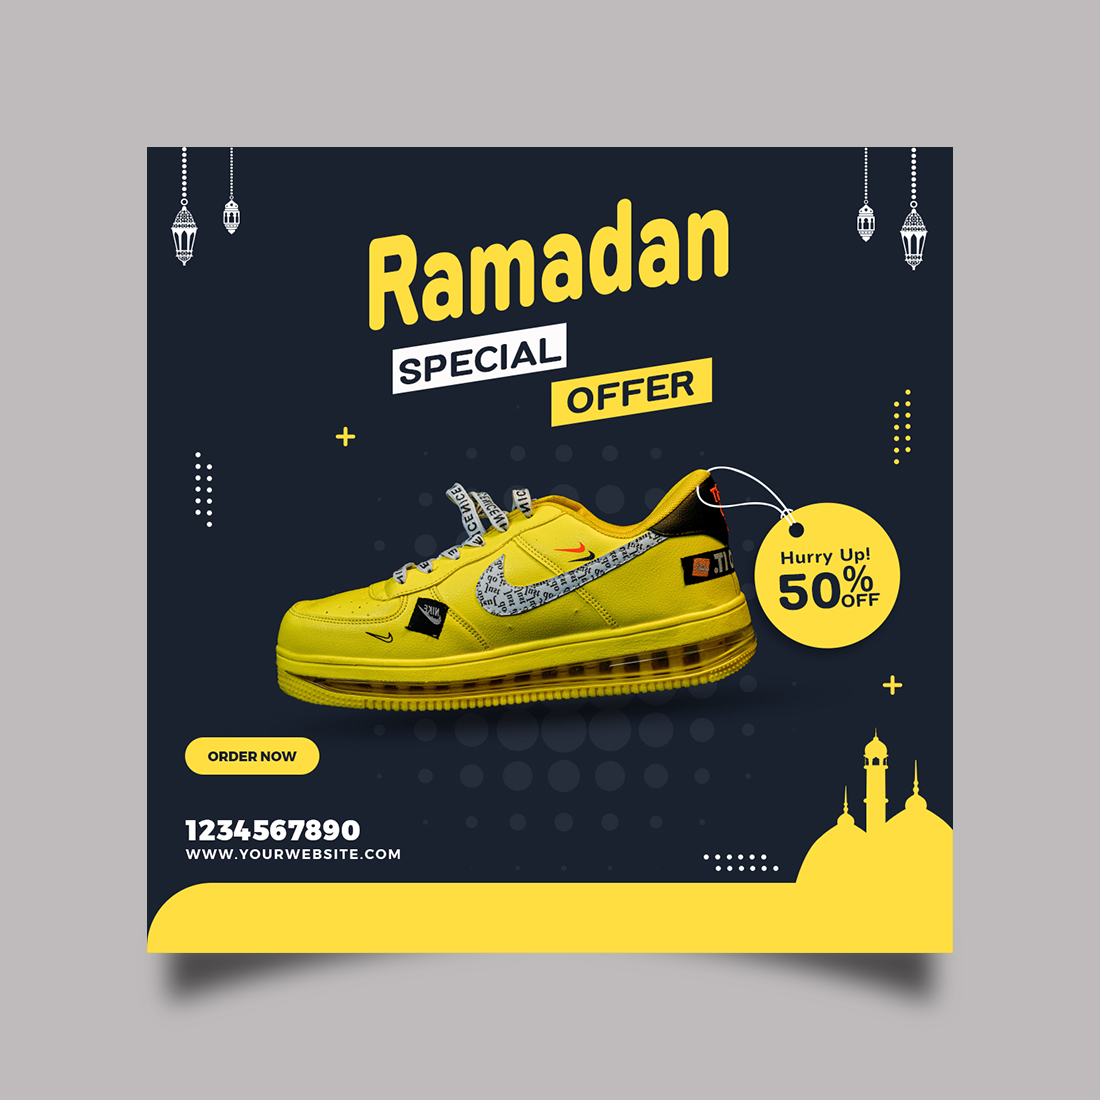 Ramadan social media And Instagram Post Template cover image.